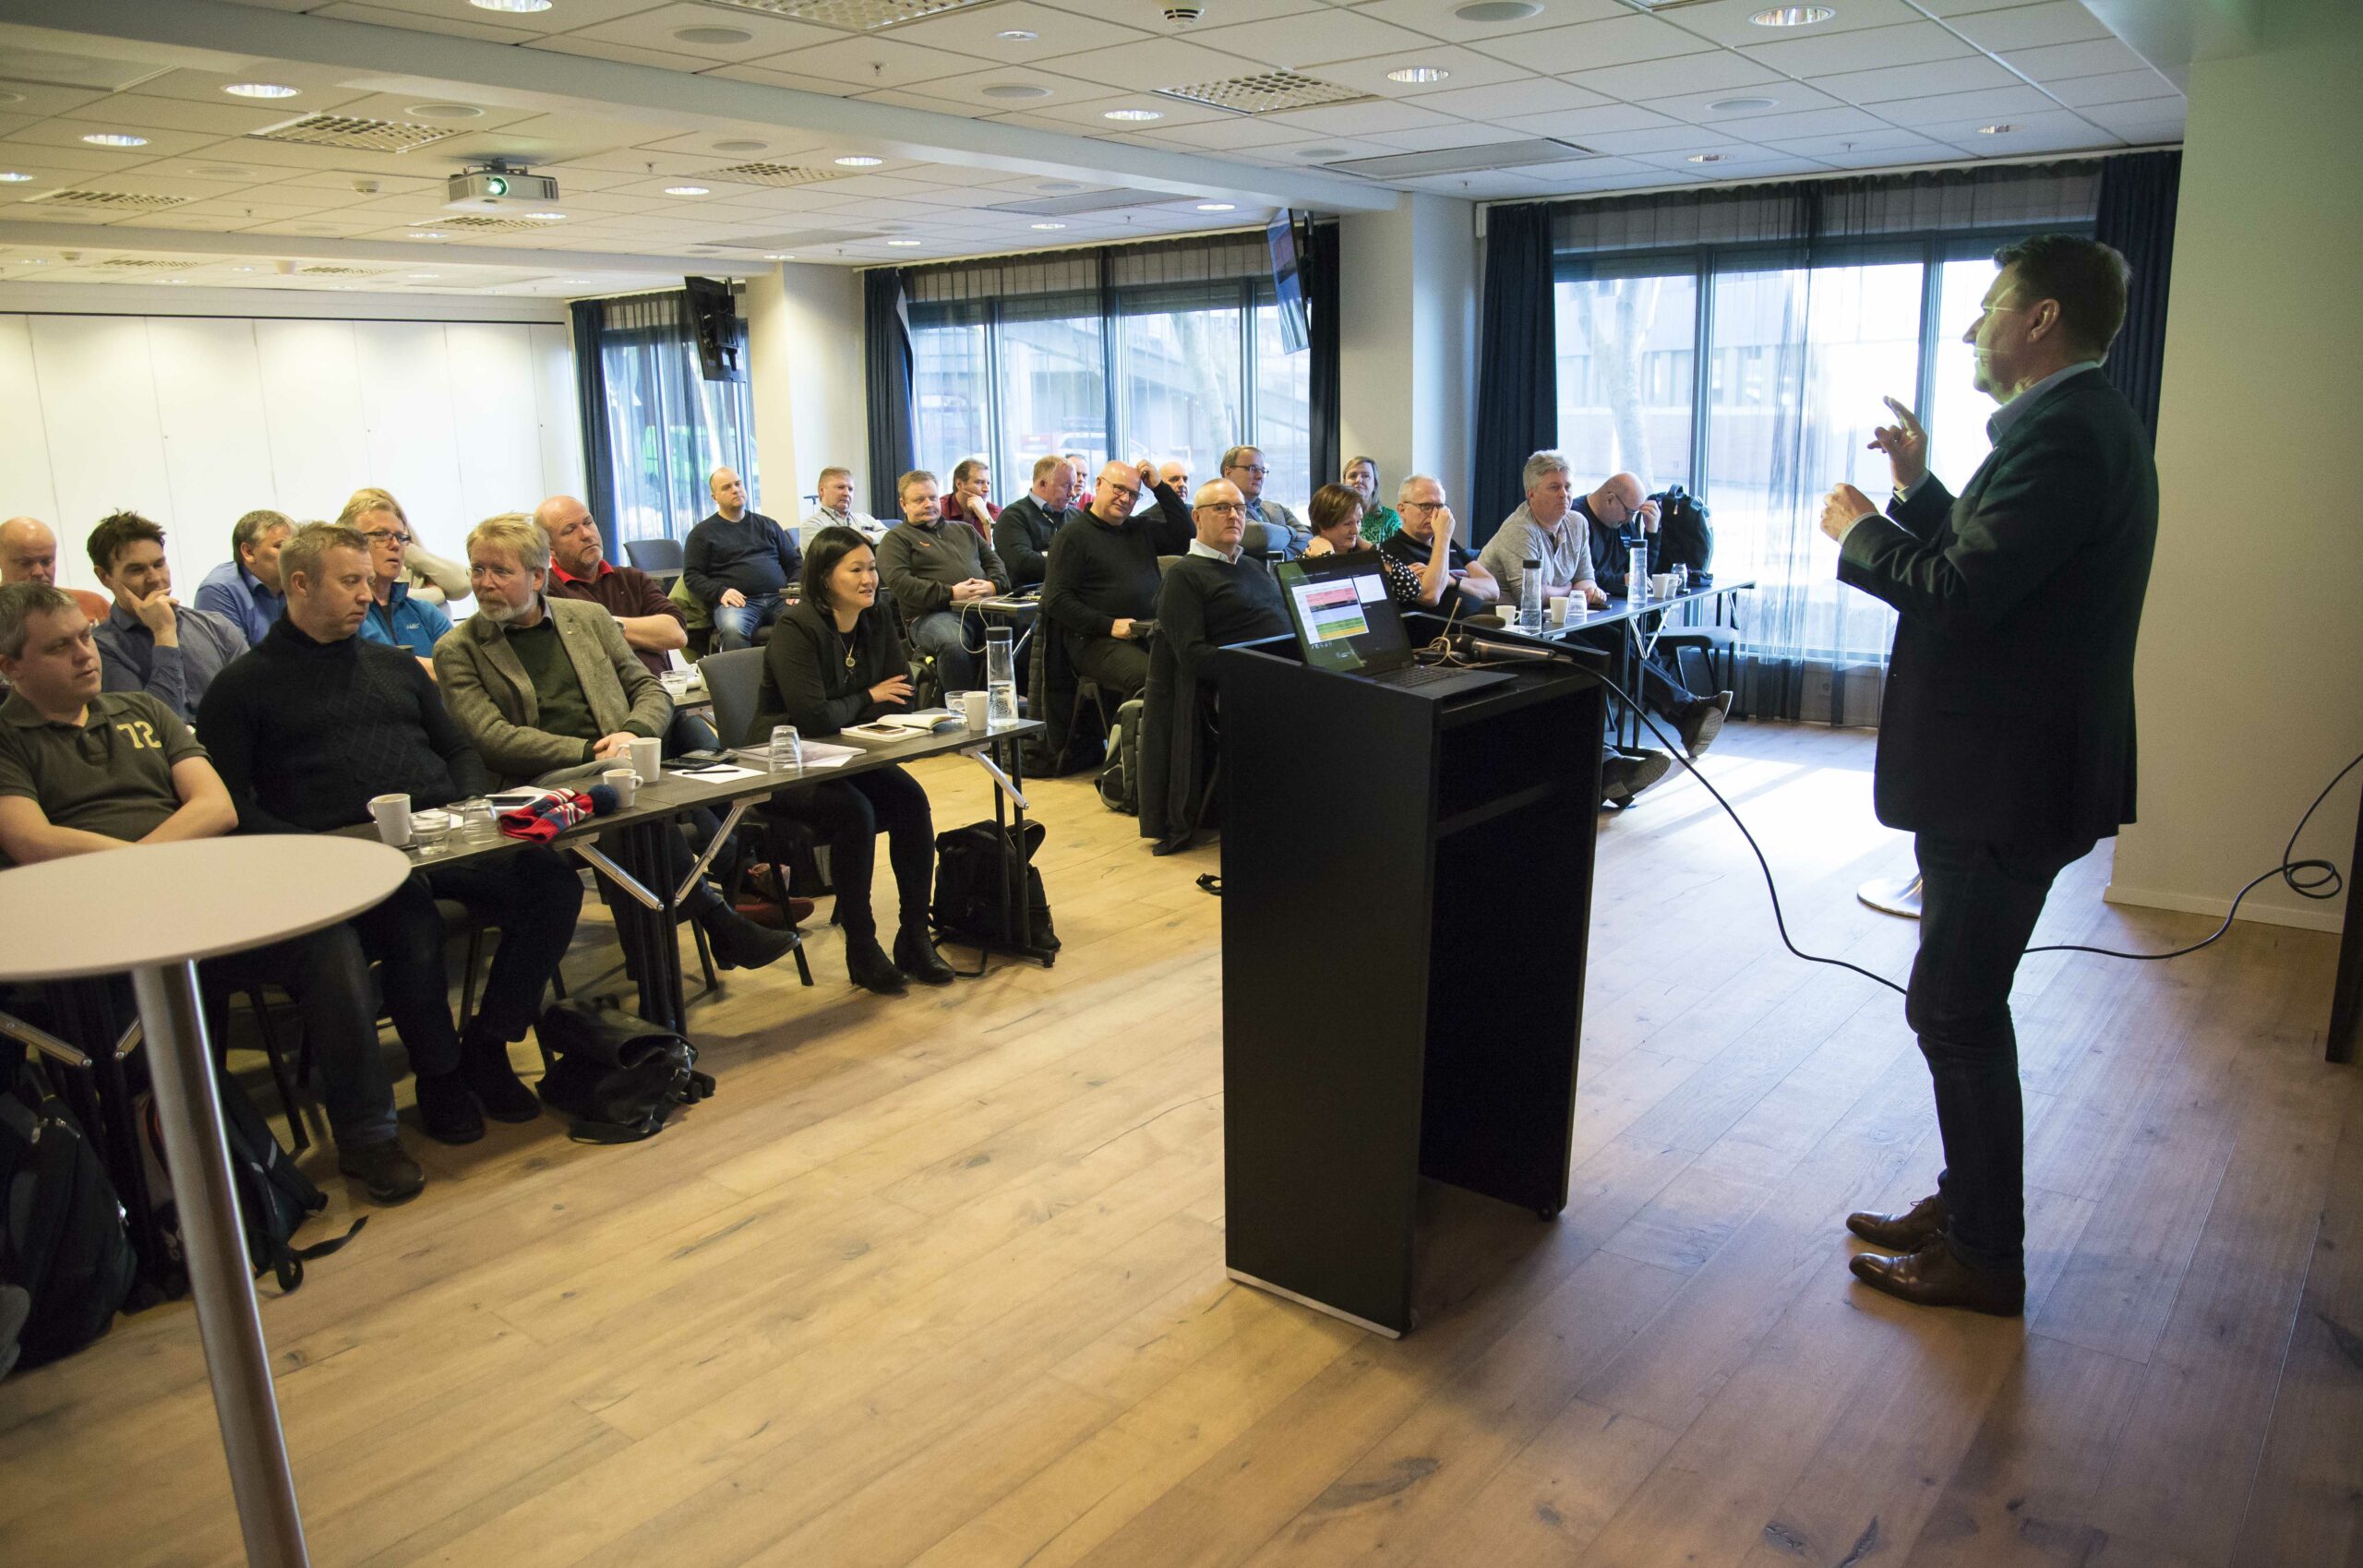 Drøyt 30 tillitsvalgte møttes til samråd om norsk sokkel i Stavanger.